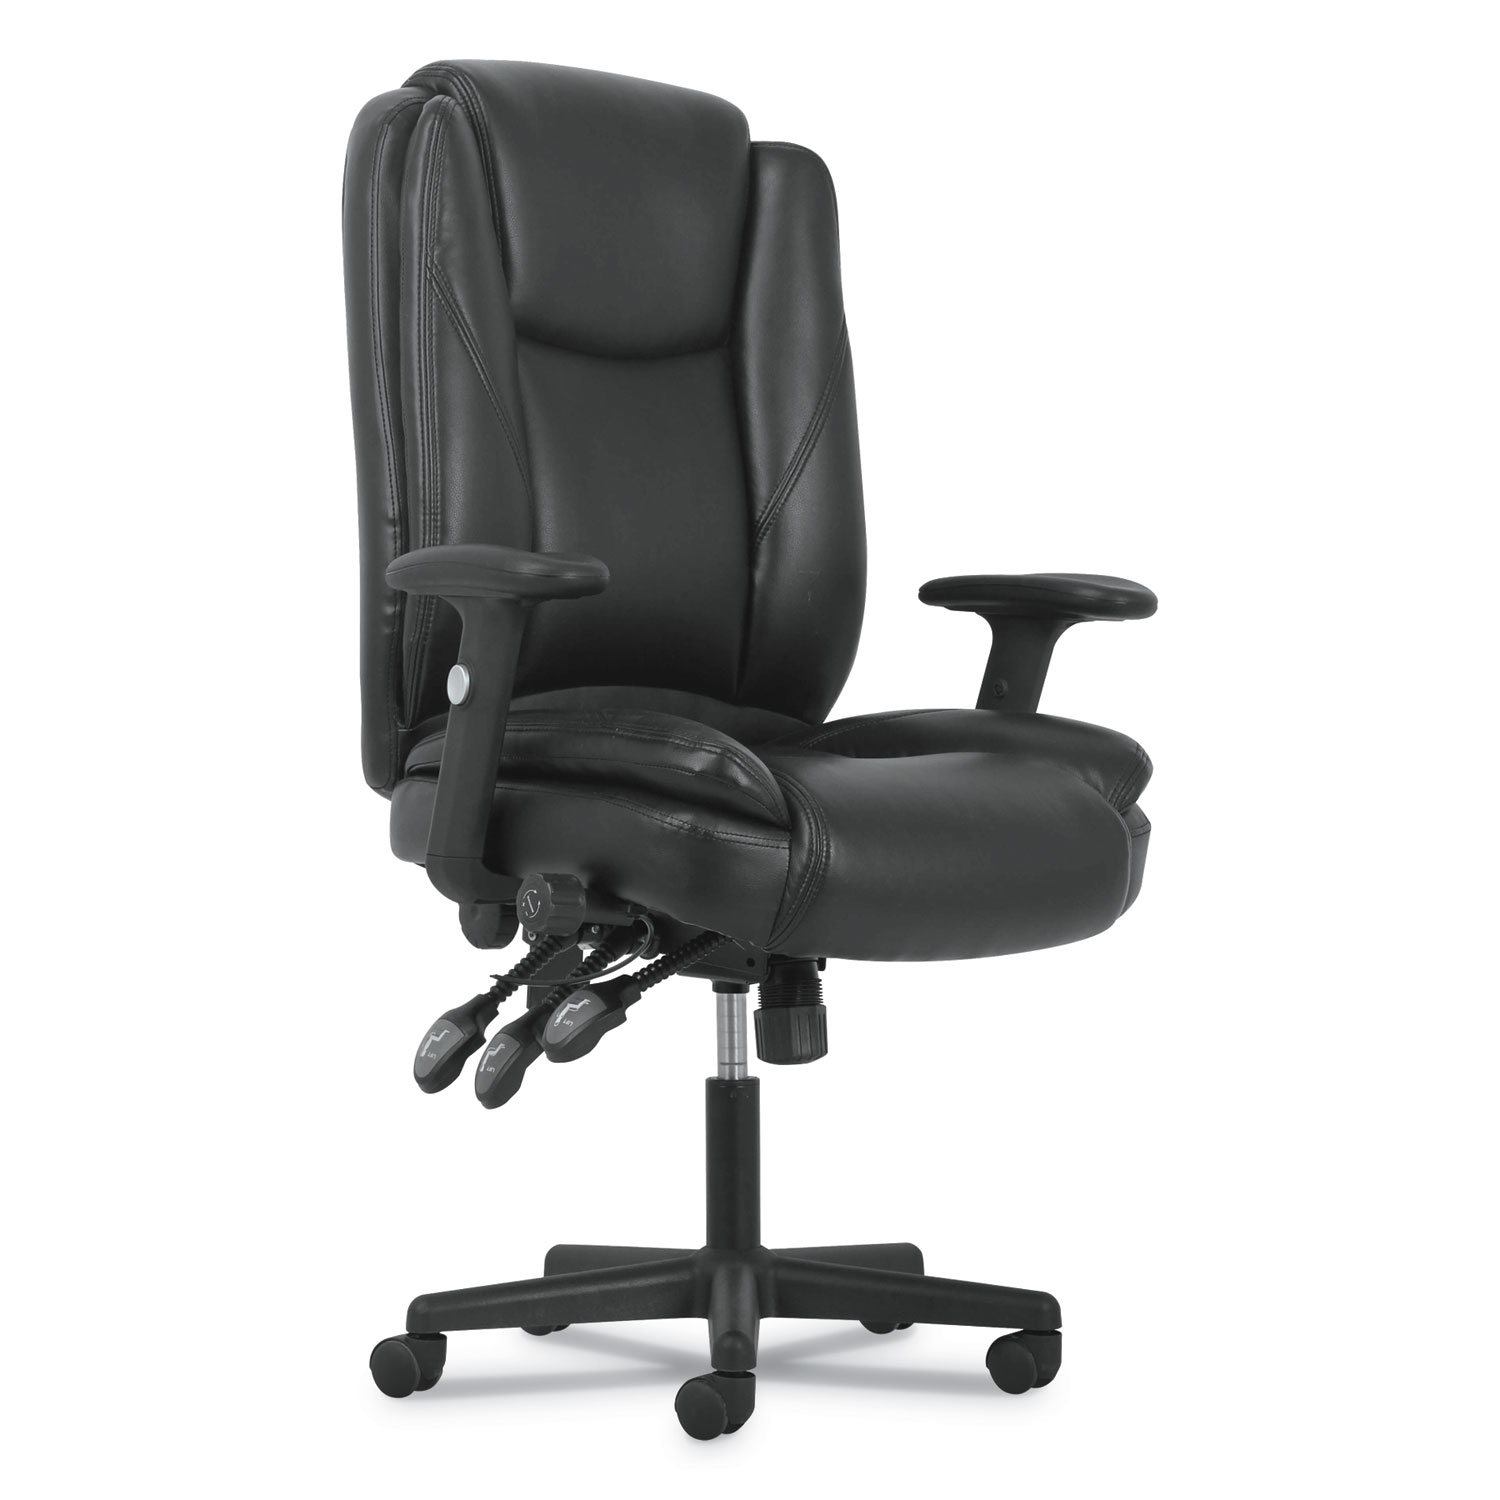  Sadie HVST331 High-Back Executive Chair, Supports up to 225 lbs., Black Seat/Black Back, Black Base (BSXVST331) 